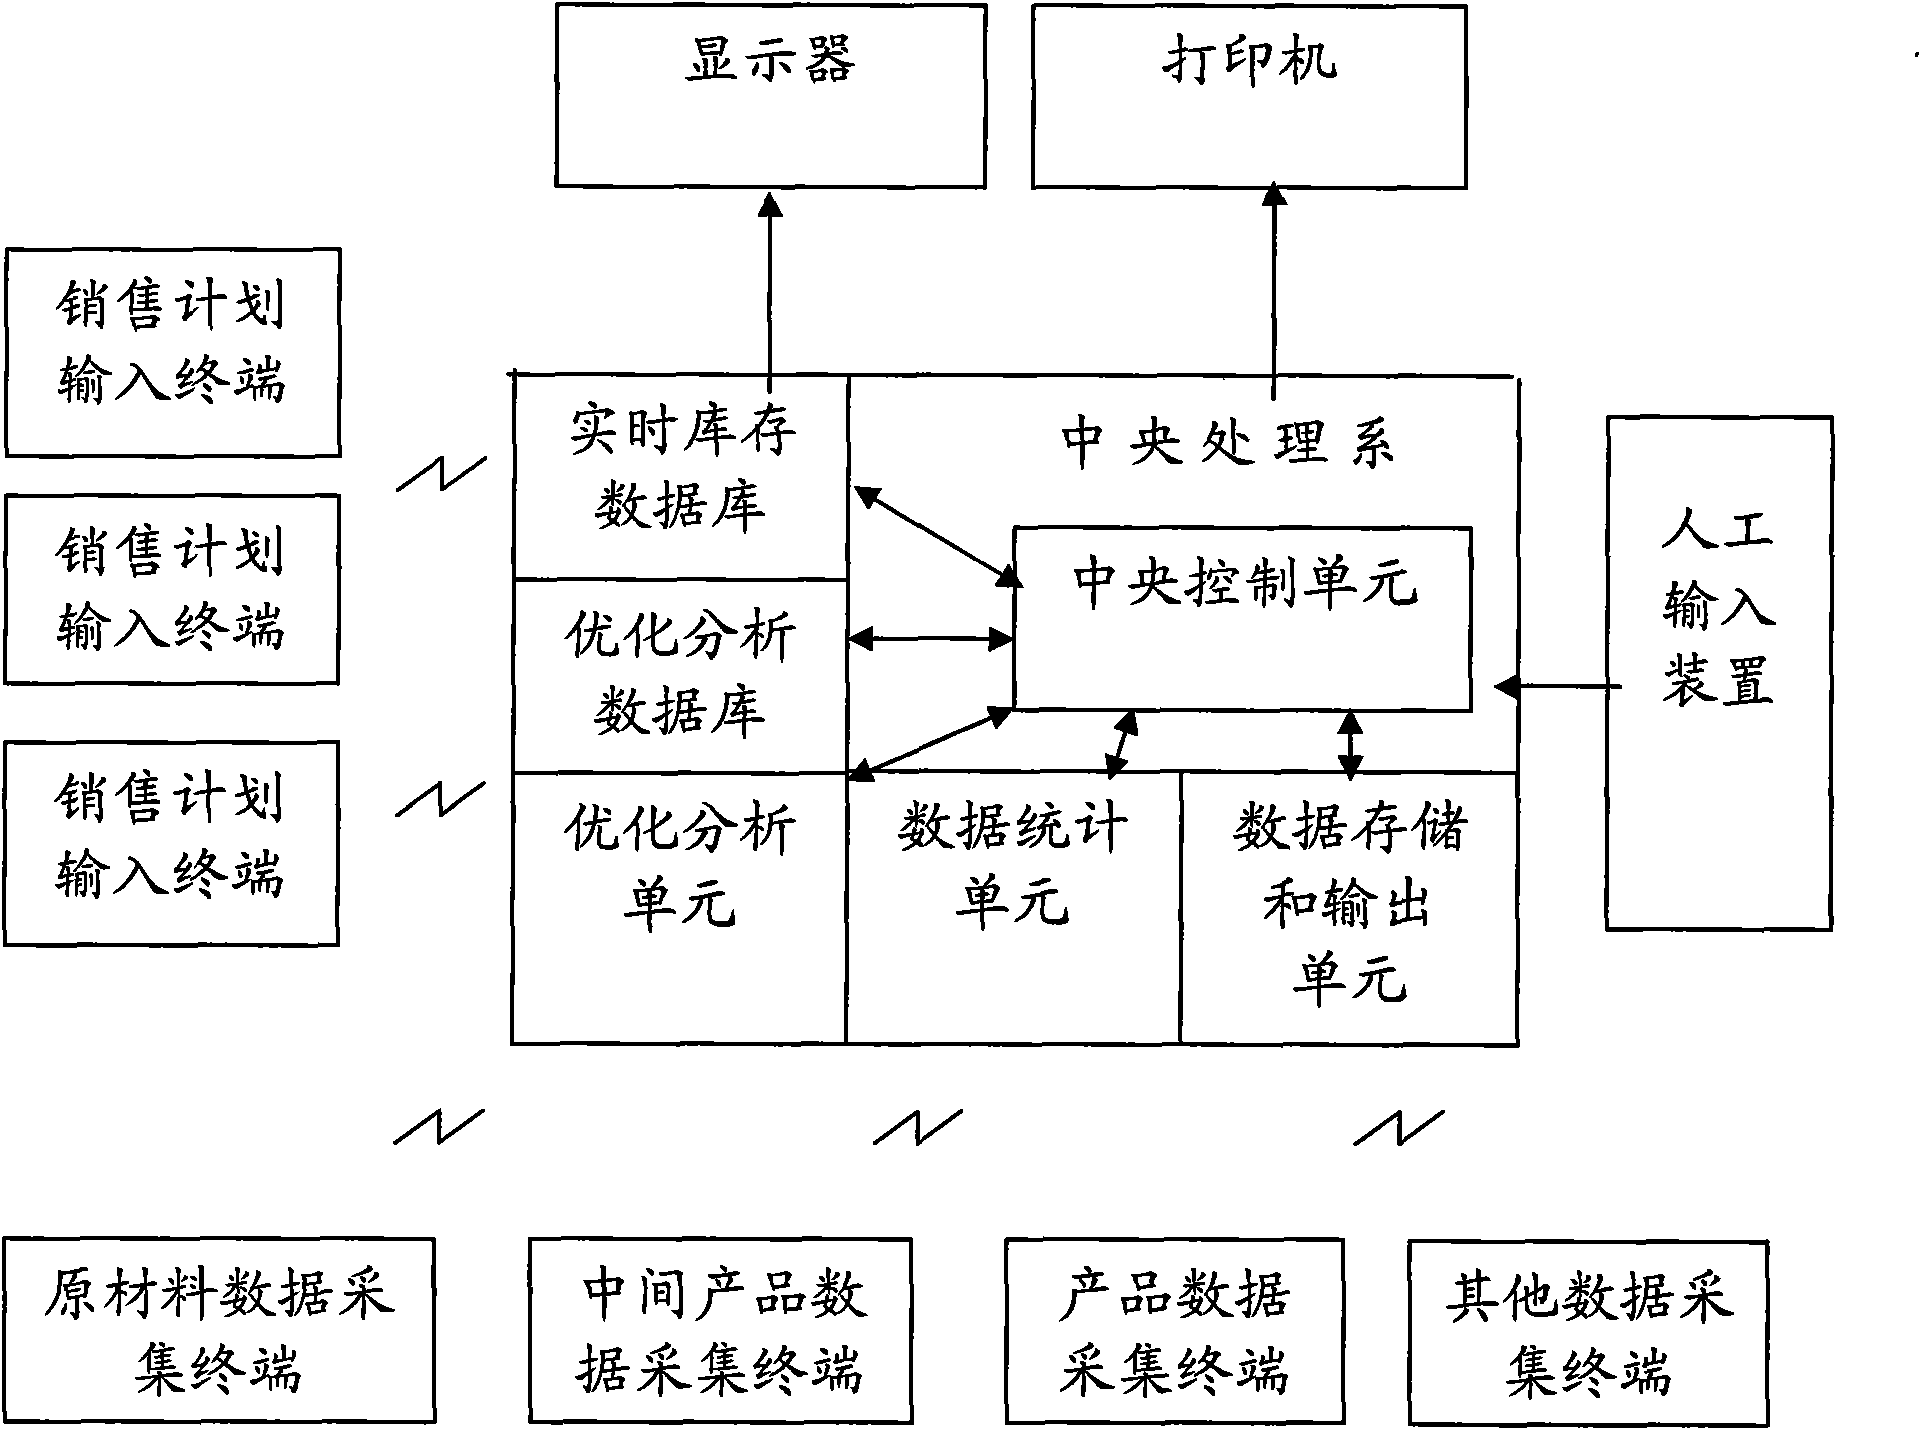 Remote computer inventory management system of production enterprises